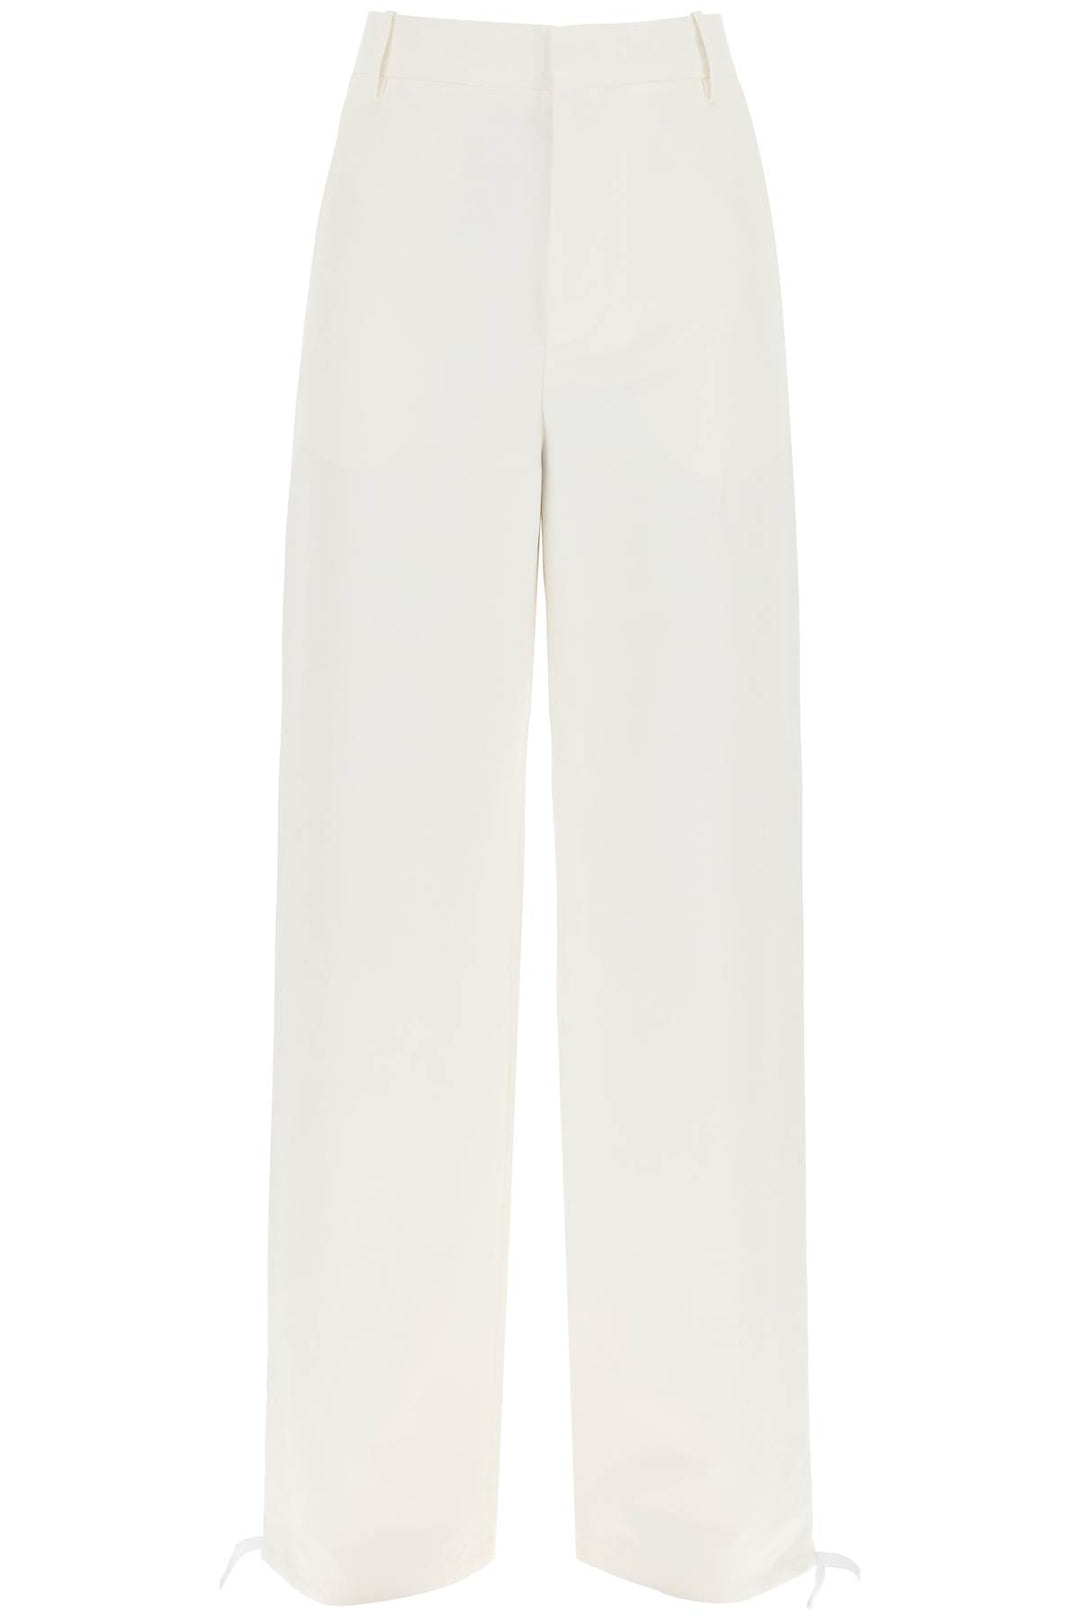 Marni Technical Linen Utility Pants   Bianco